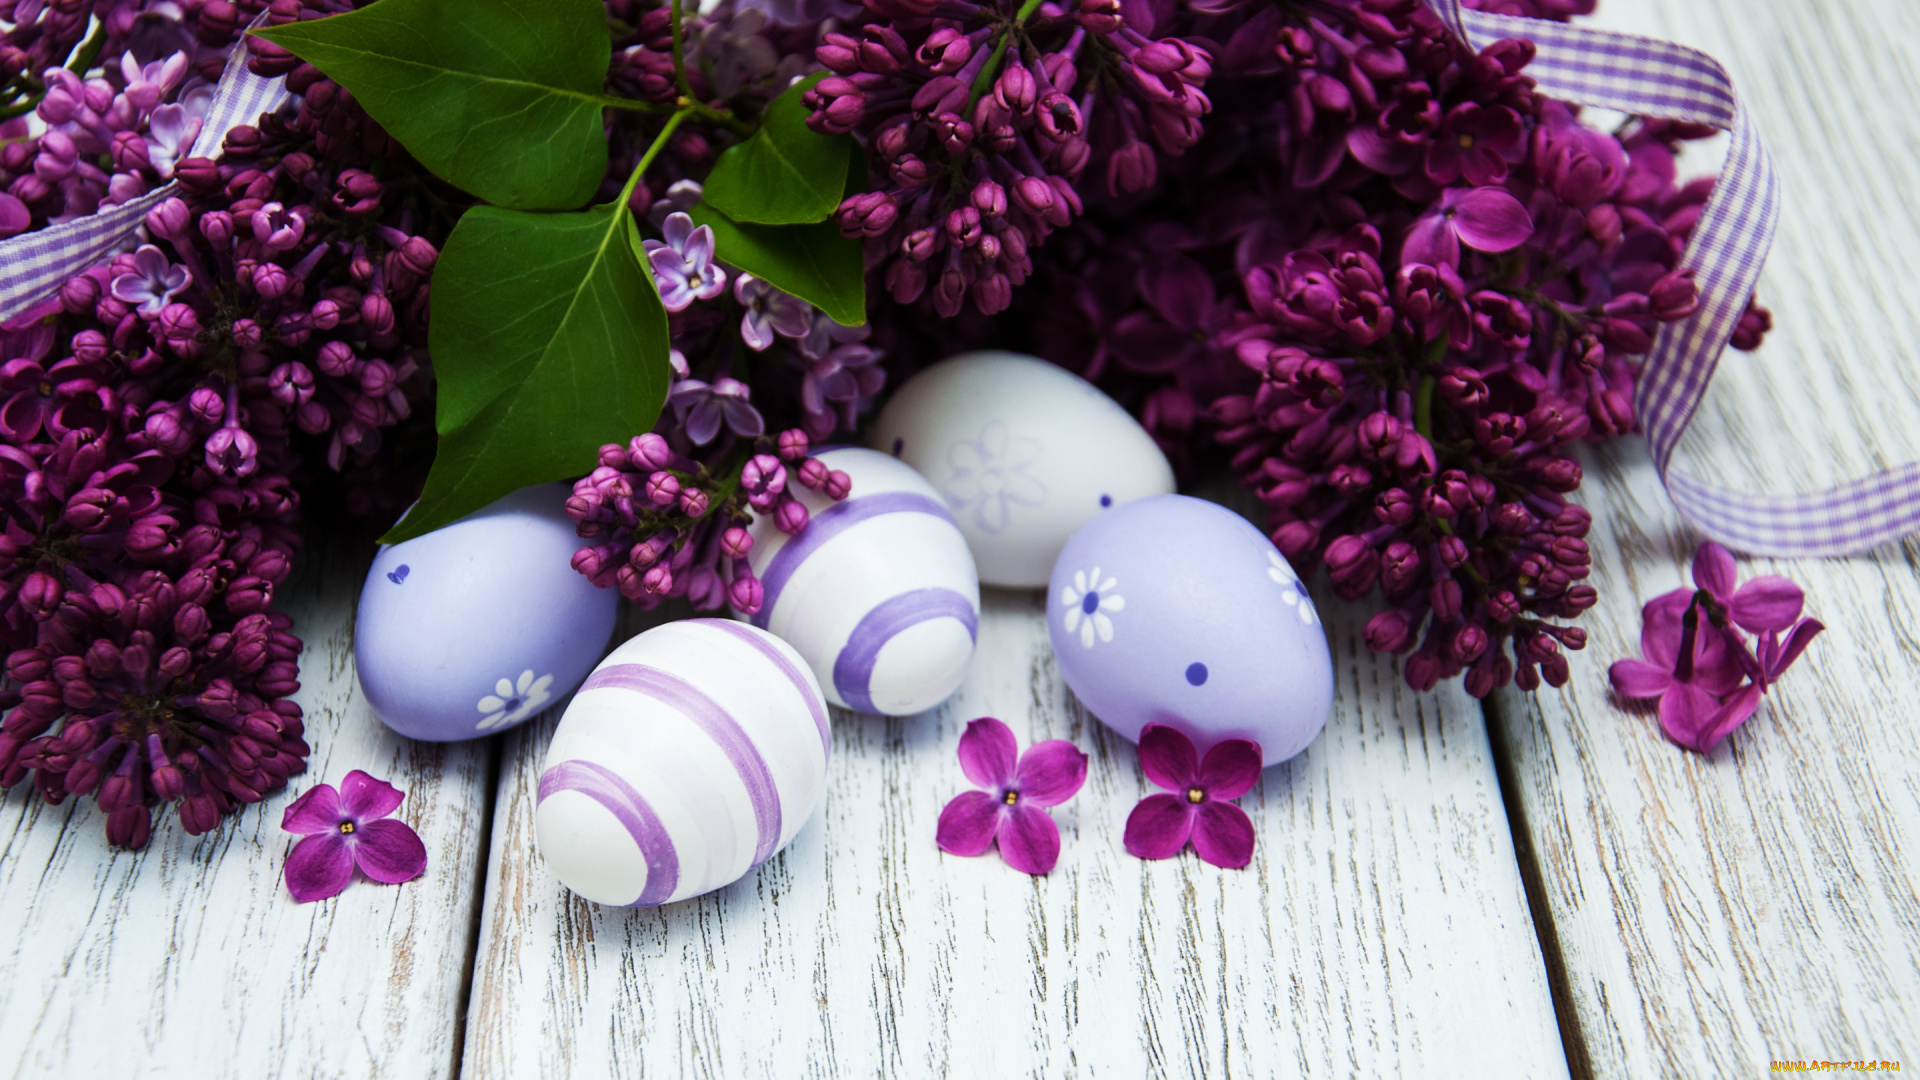 праздничные, пасха, цветы, яйца, happy, wood, flowers, сирень, easter, purple, eggs, decoration, lilac